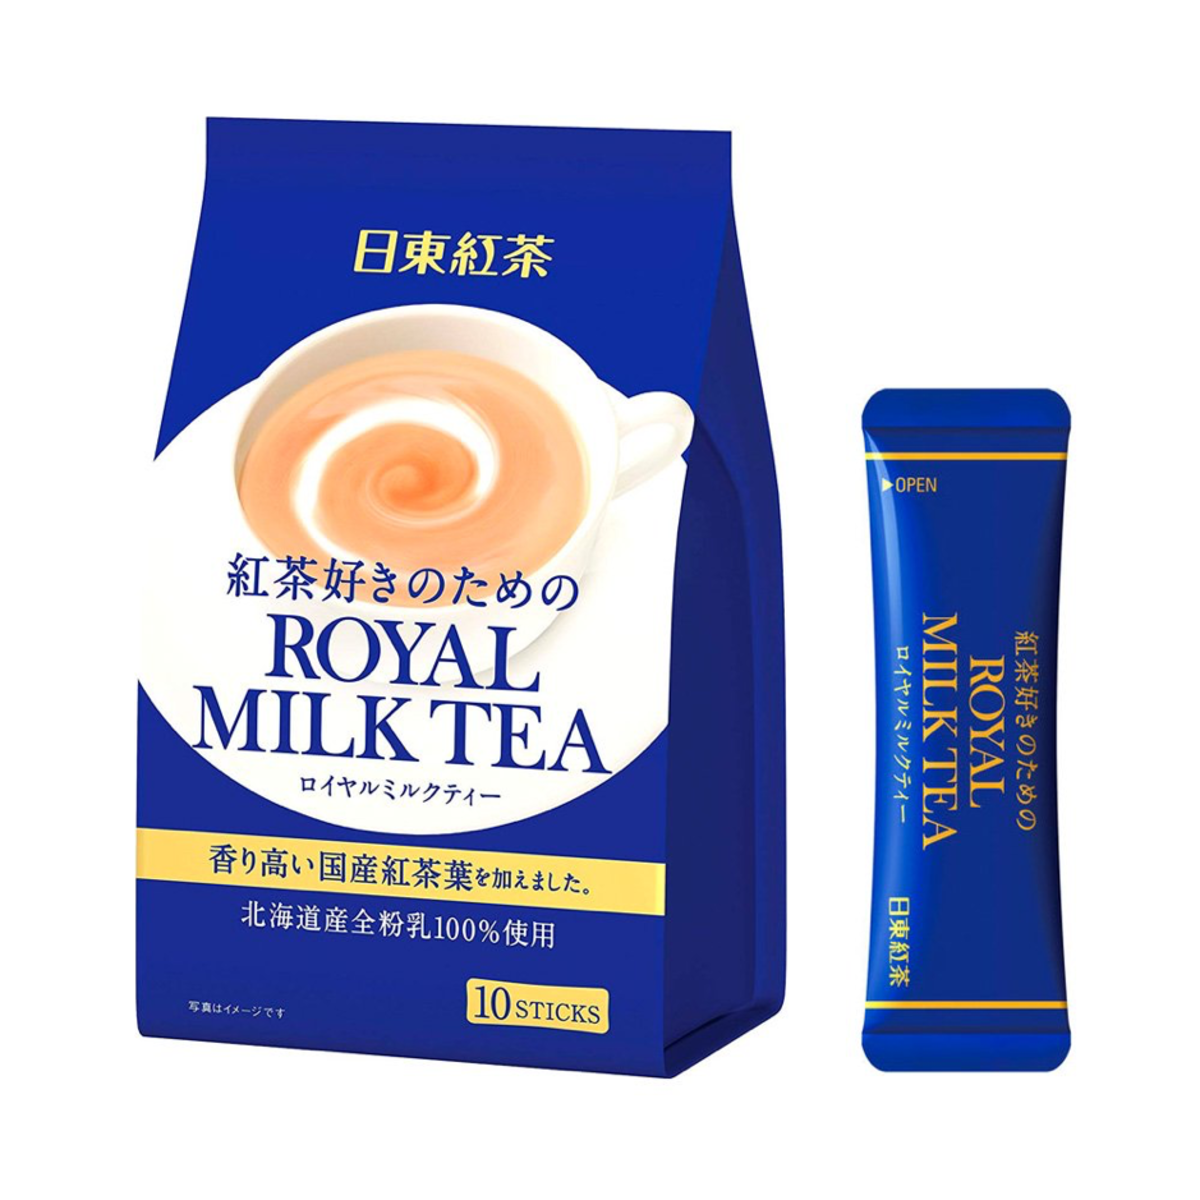 MITSUI NITTOH TEA ROYAL MILK TEA 14 G * 10 P - Premium Co.  Groceries 